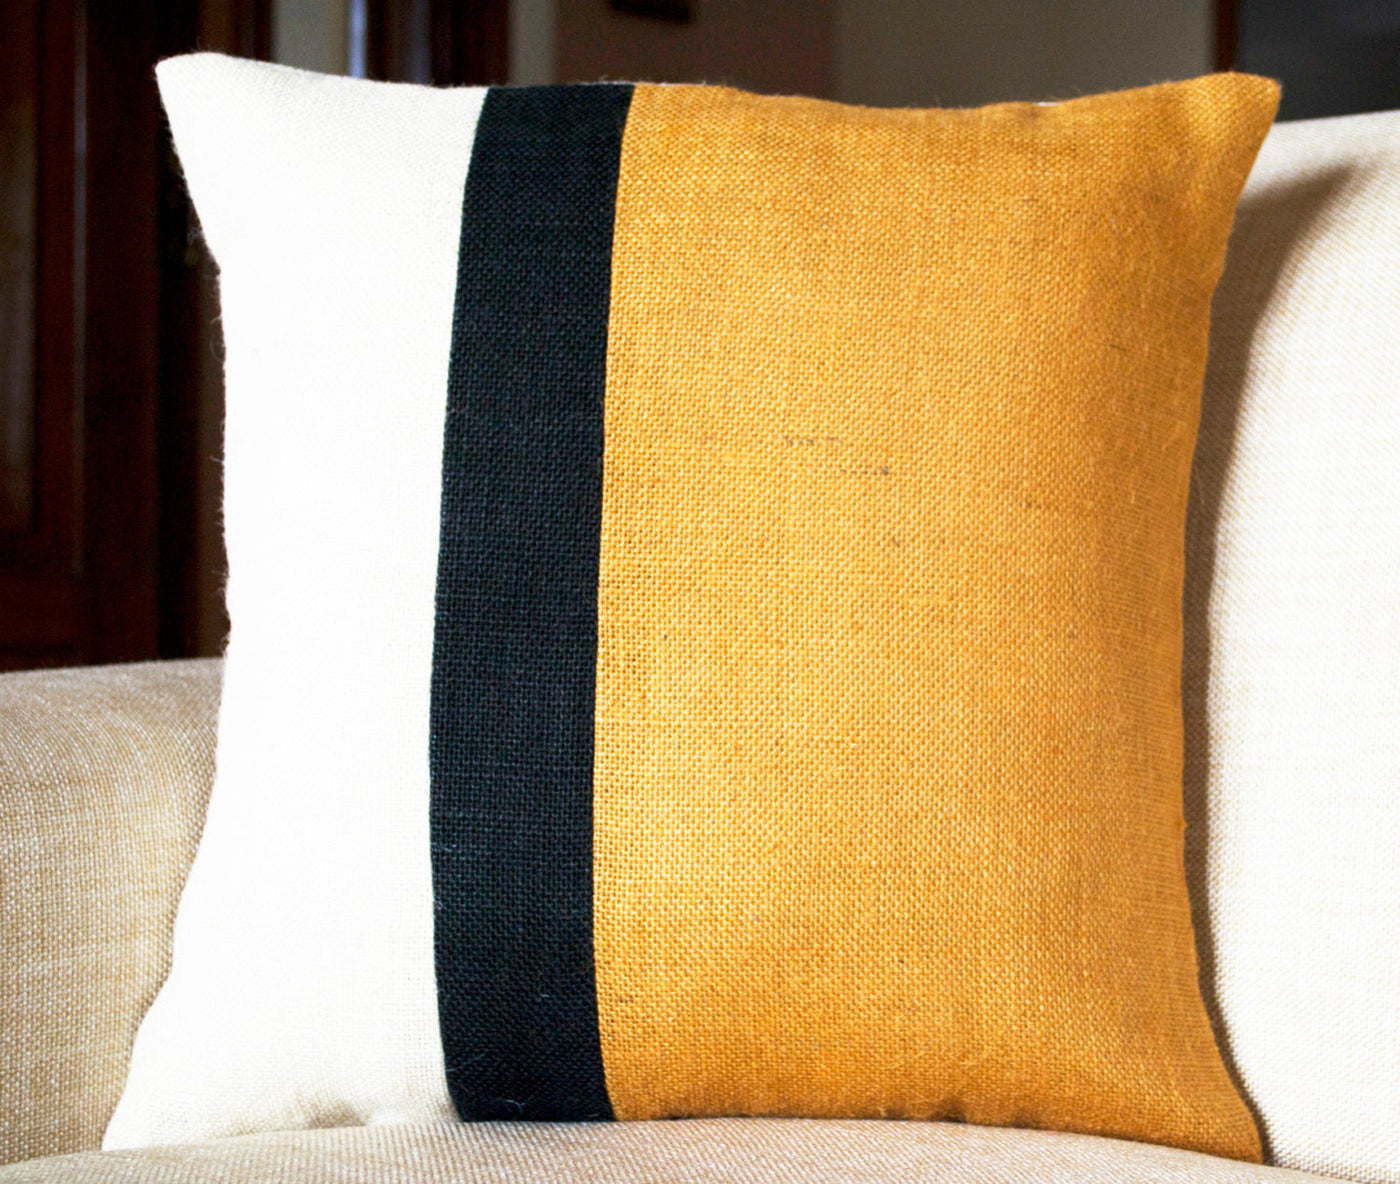 Mustard Pillow - Burlap Pillow color block - Mustard Decorative cushion cover- Throw pillow gift 16X16 - Mustard Euro Sham - Sofa pillow by Amore Beauté